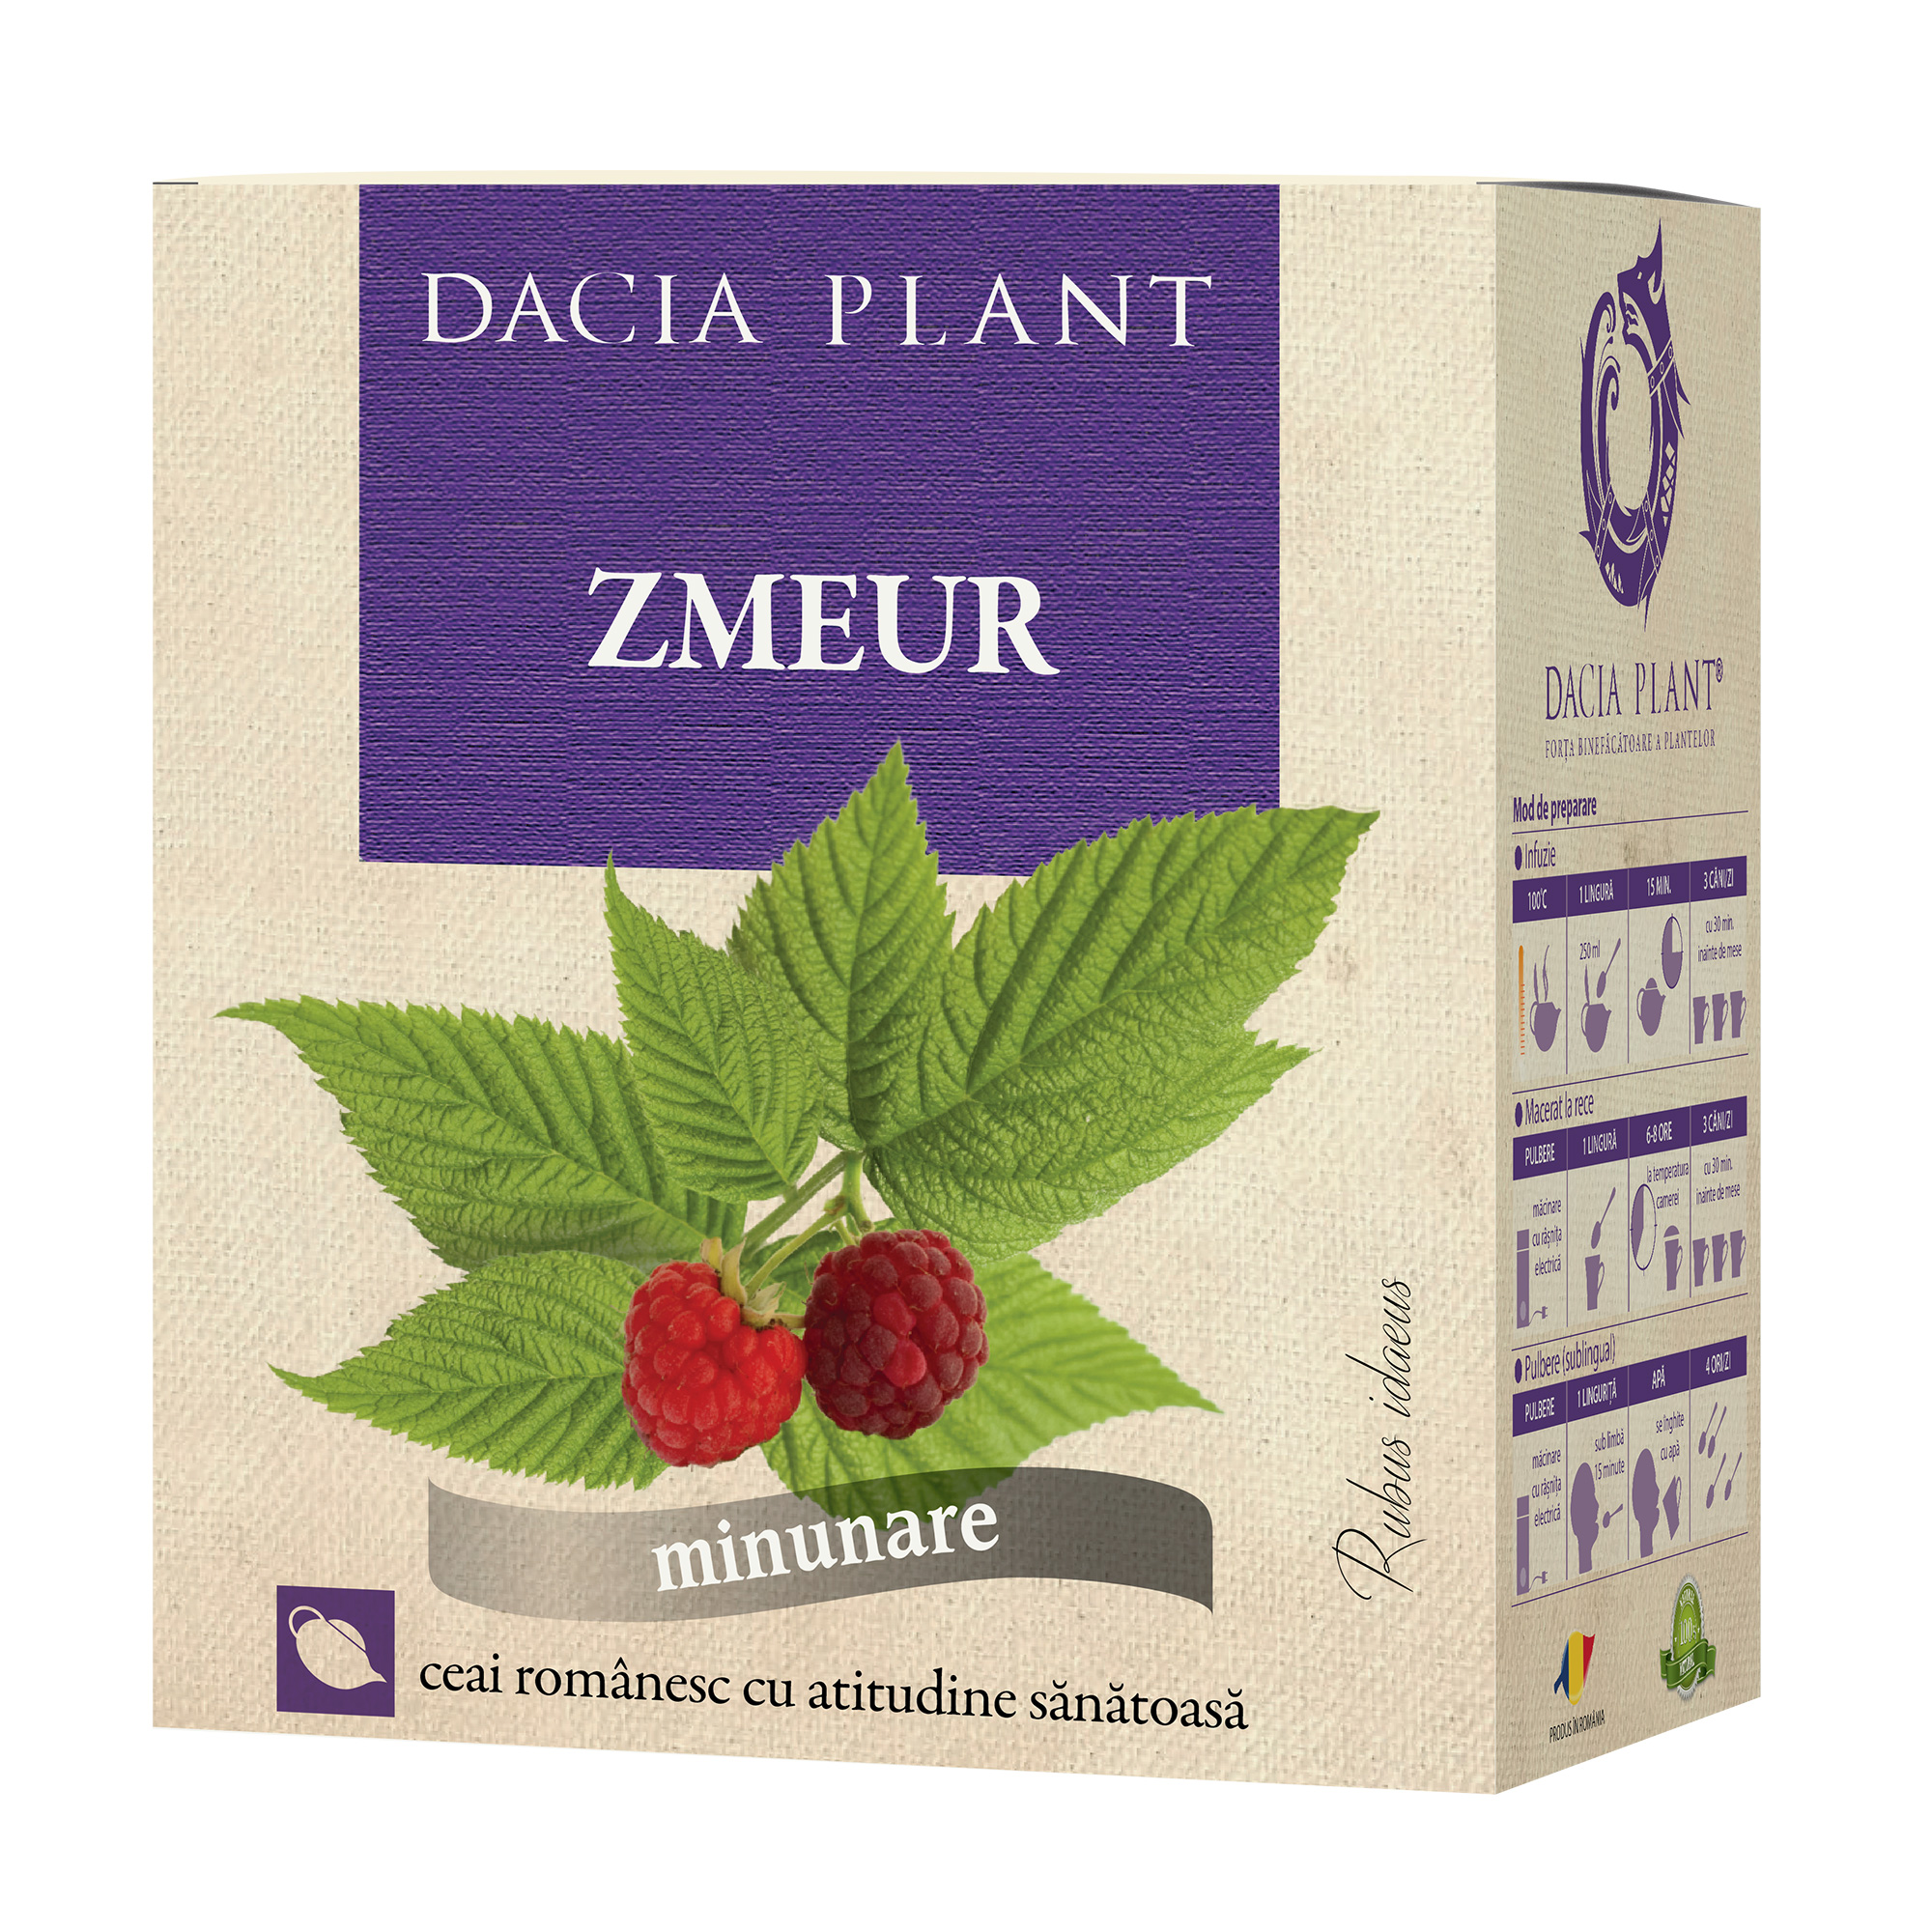 CEAIURI - Ceai de zmeur, 50 g, Dacia Plant, sinapis.ro